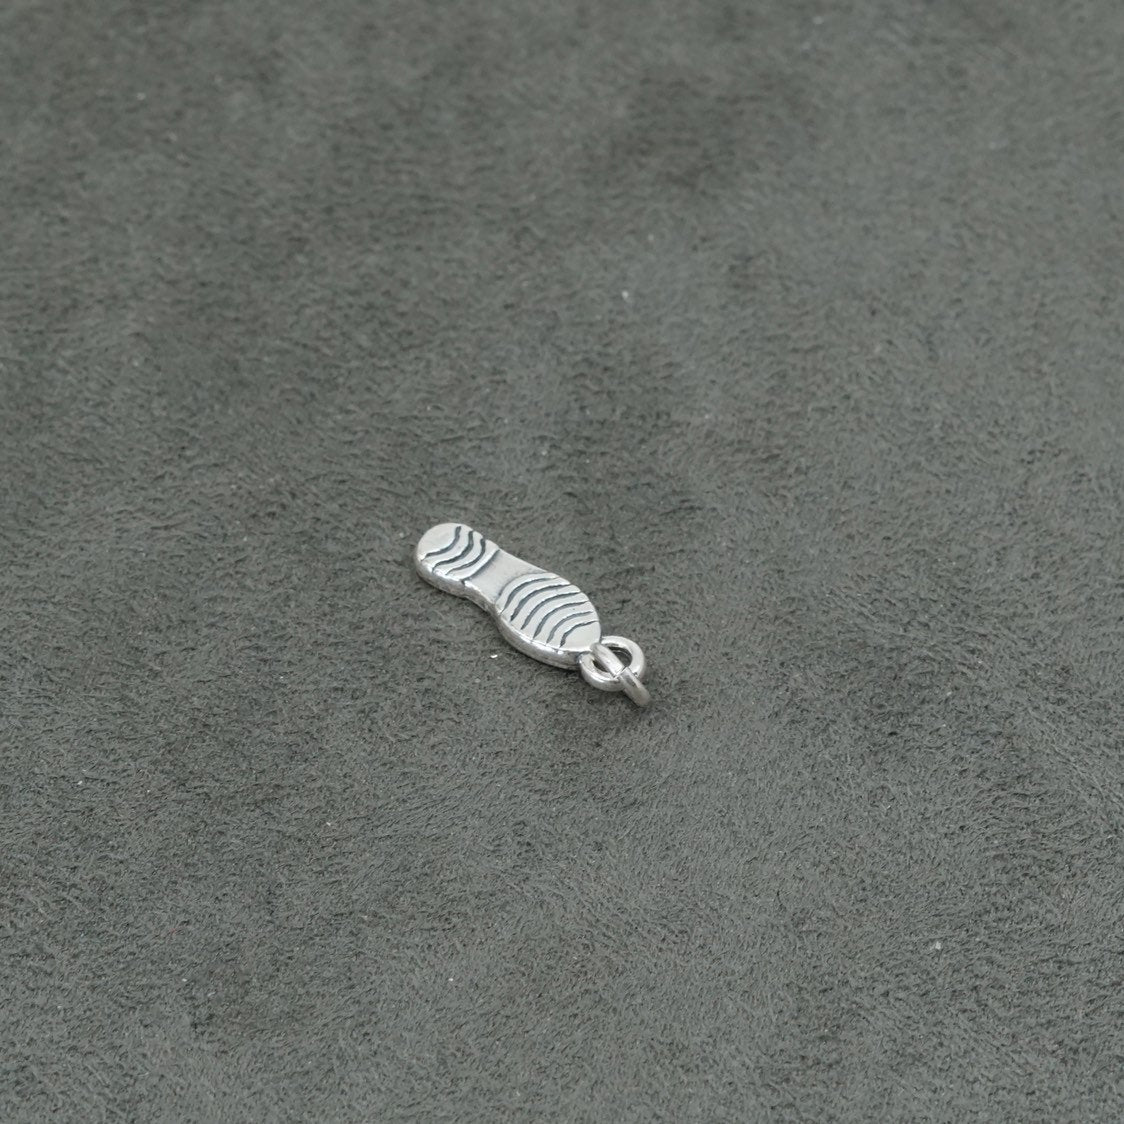 vtg SJC sterling silver handmade pendant, 925 out sole charm